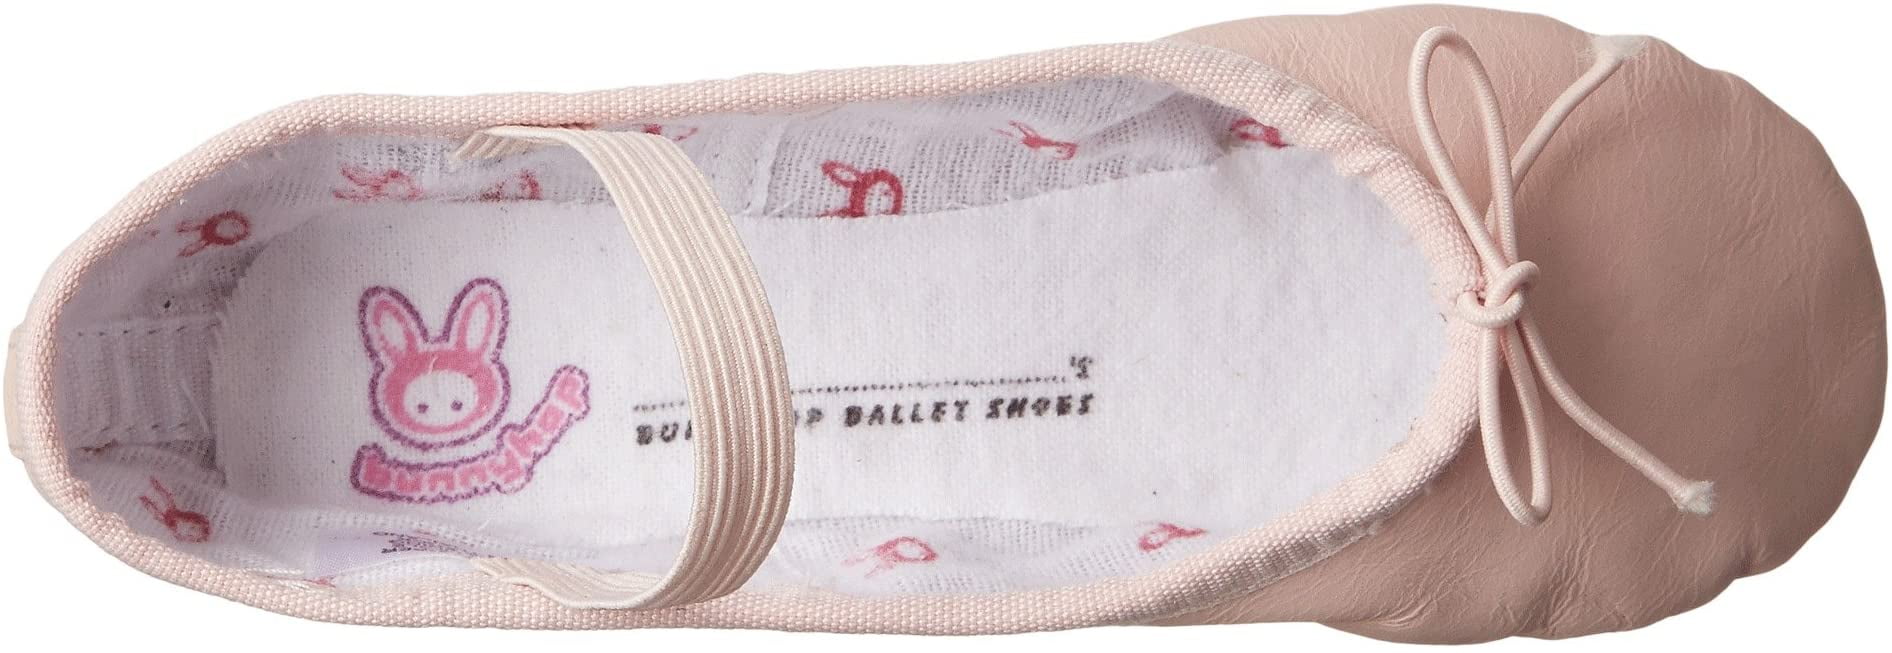 Bloch Dance Bunnyhop Ballet Slipper Toddler Little Kid 4 8 Years Pink  6 B US 